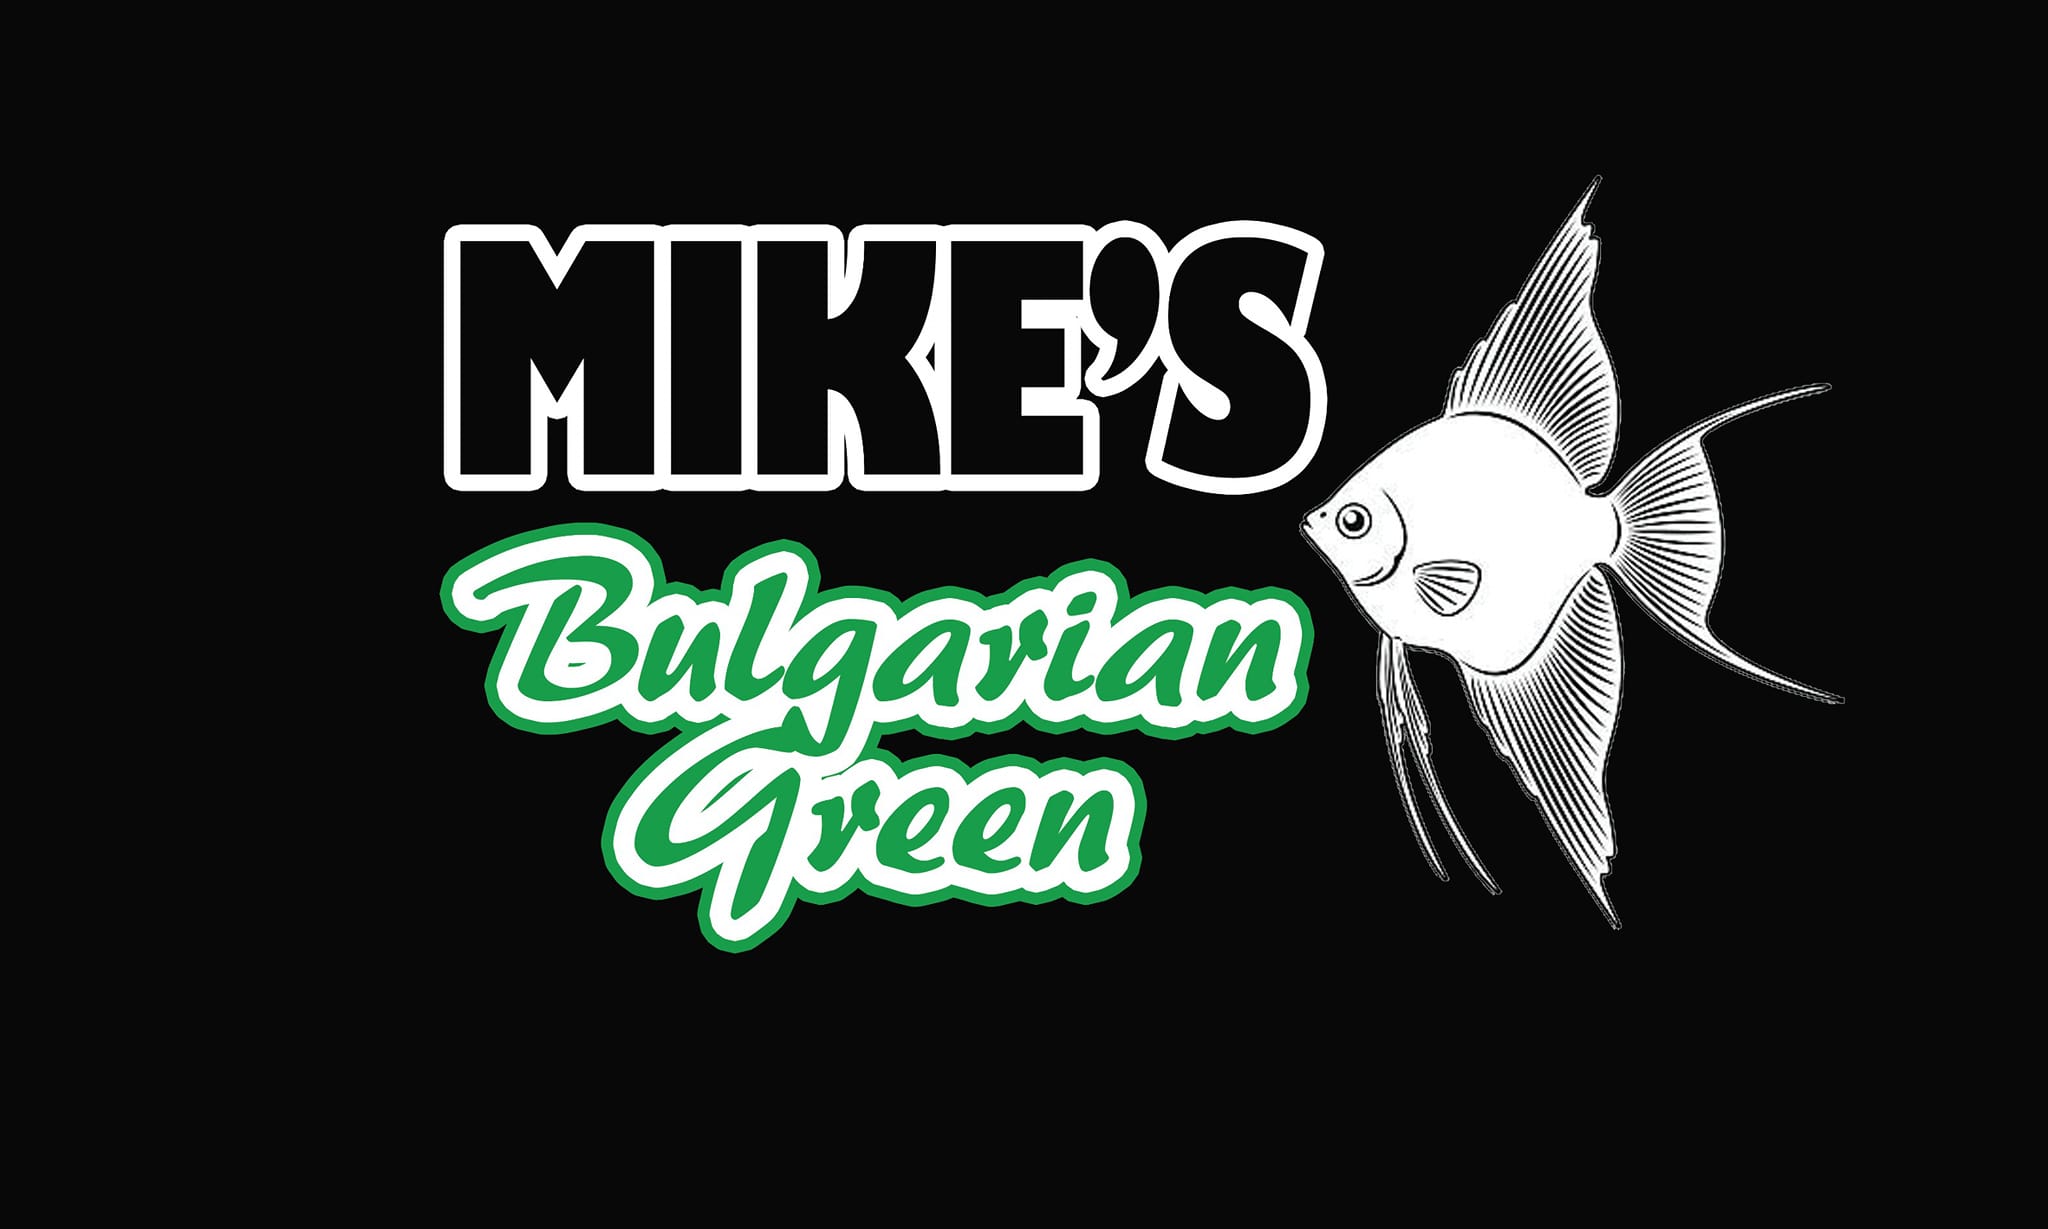 Mike's Bulgarian Green